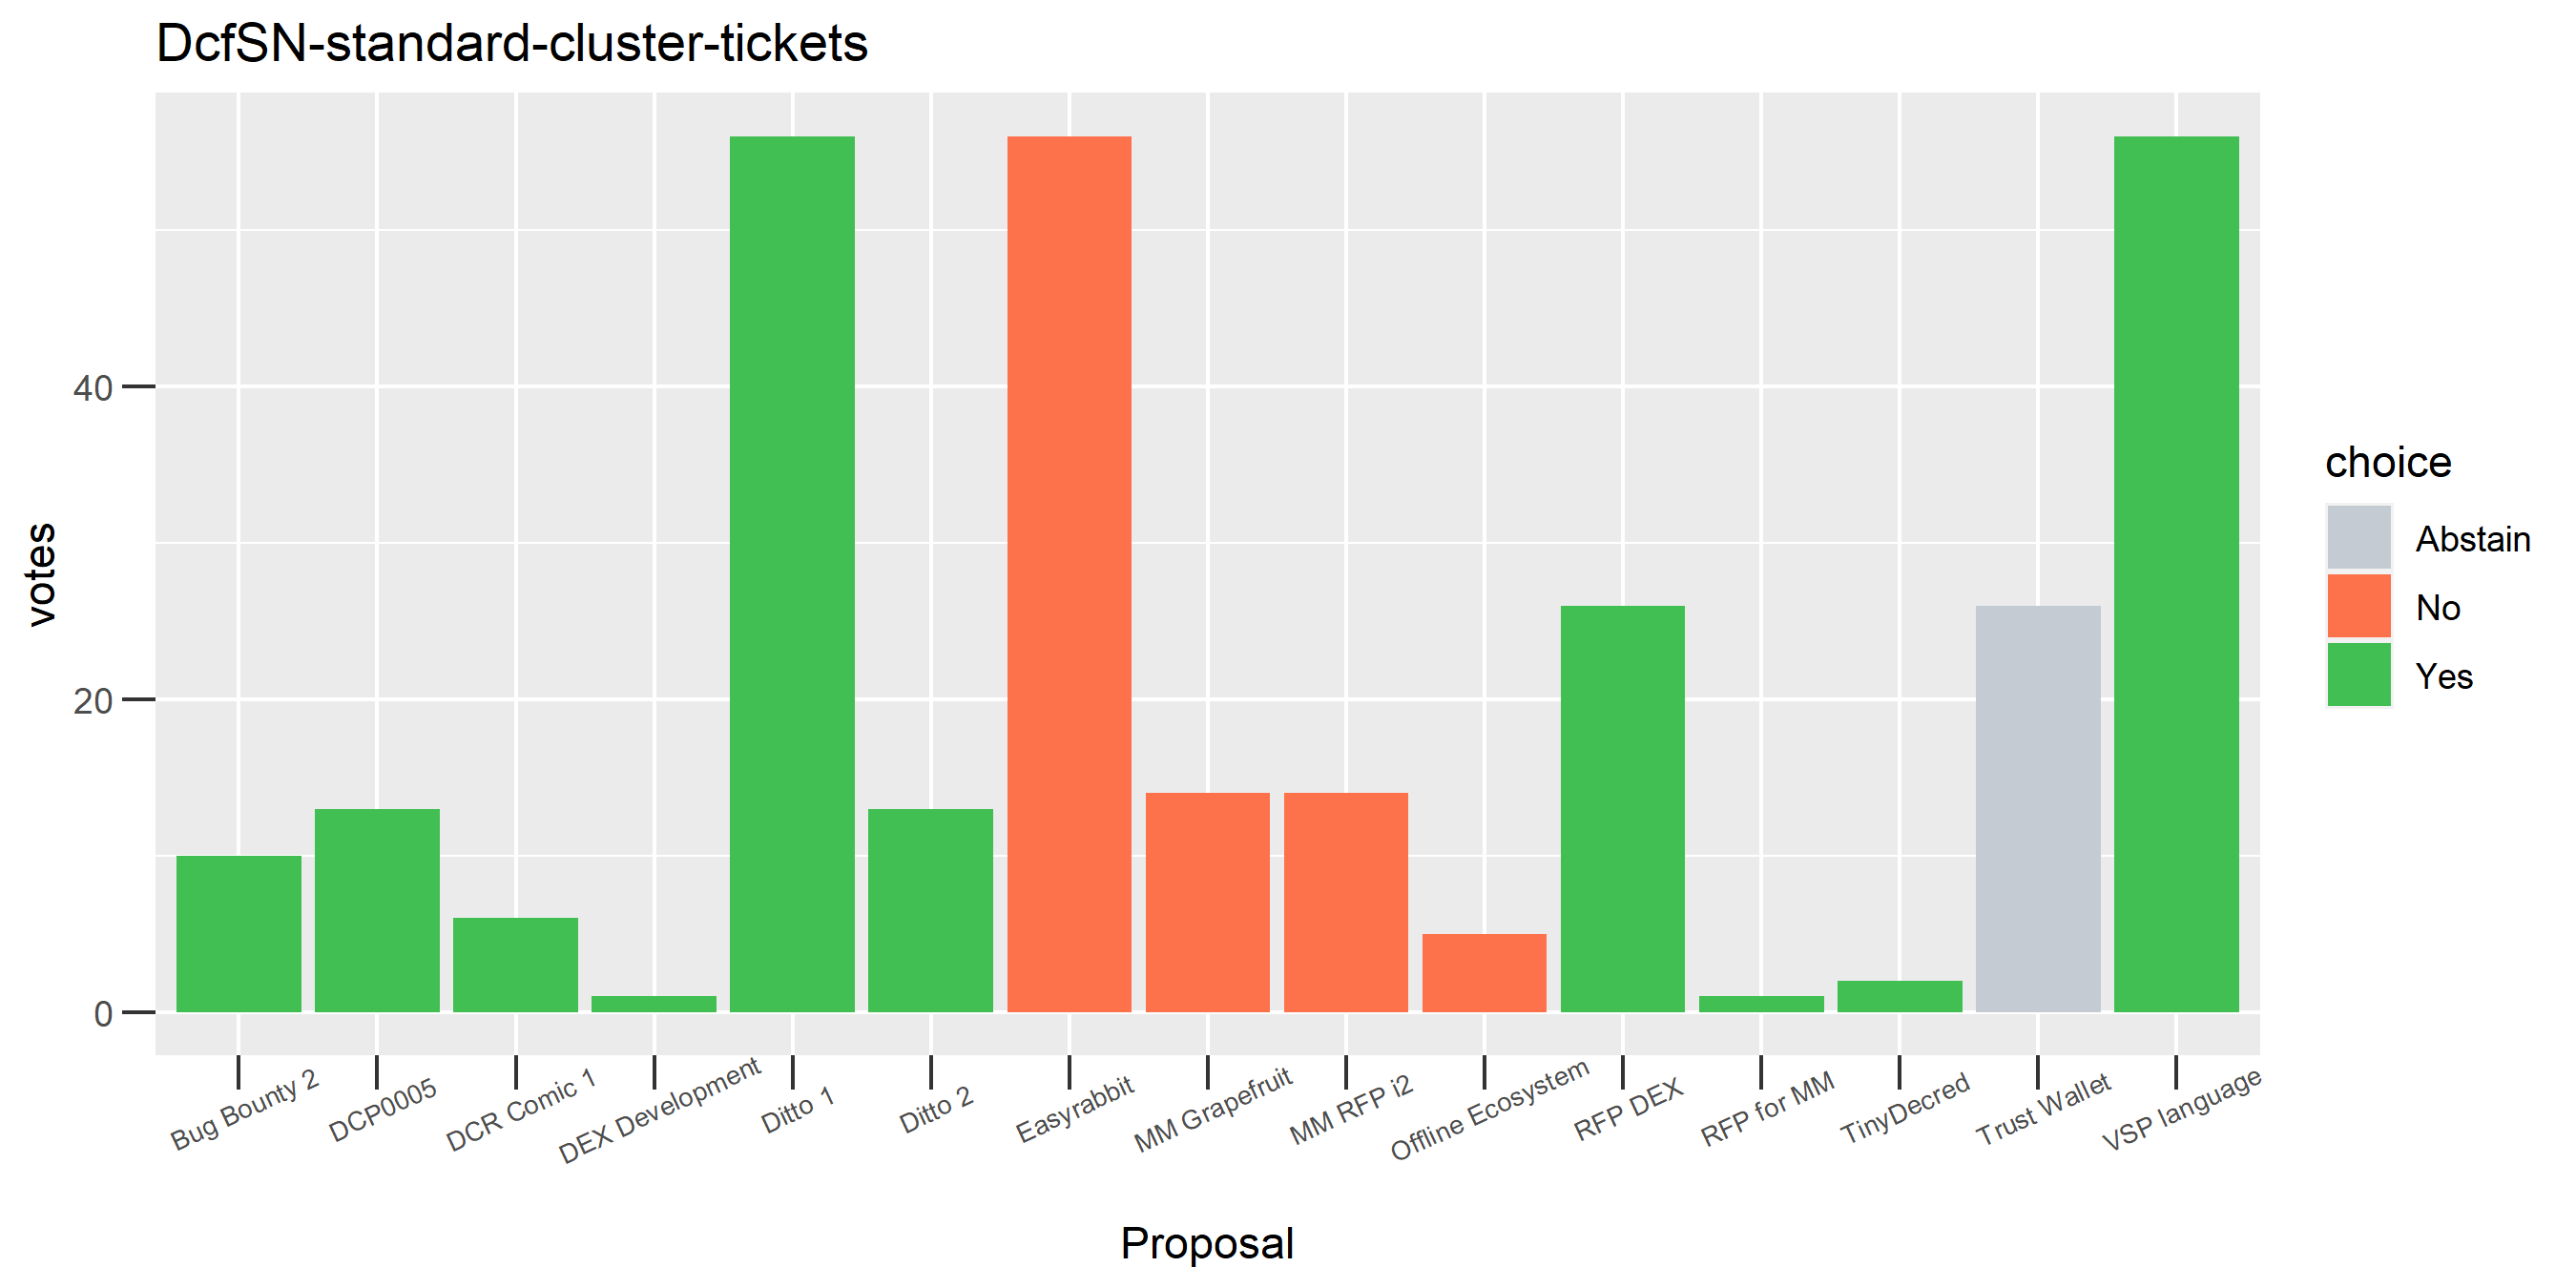 DcfSN-standard-cluster-tickets